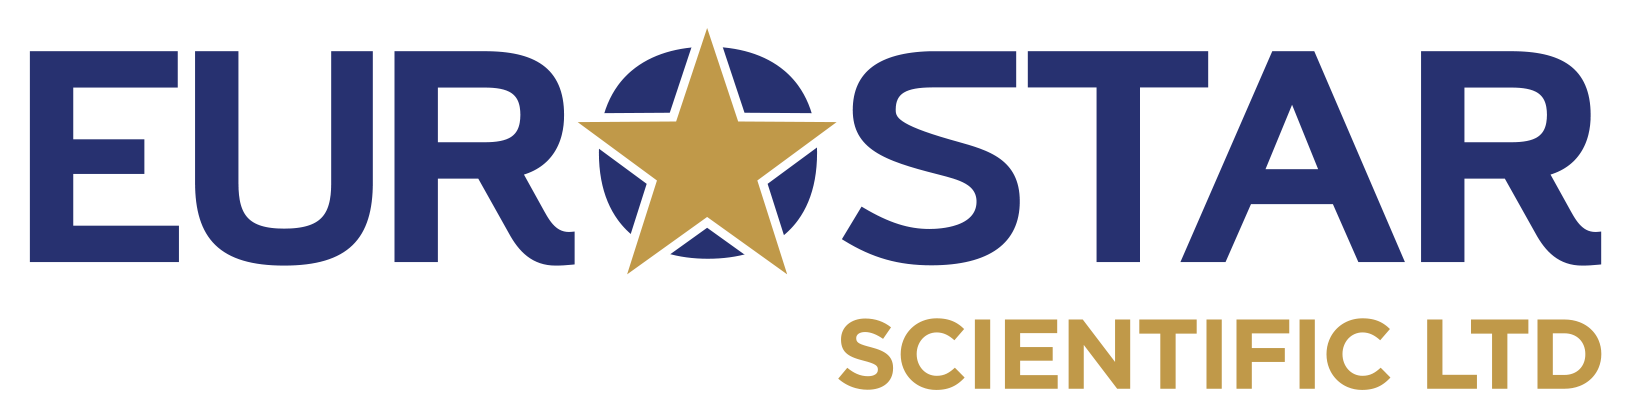 Eurostar Scientific